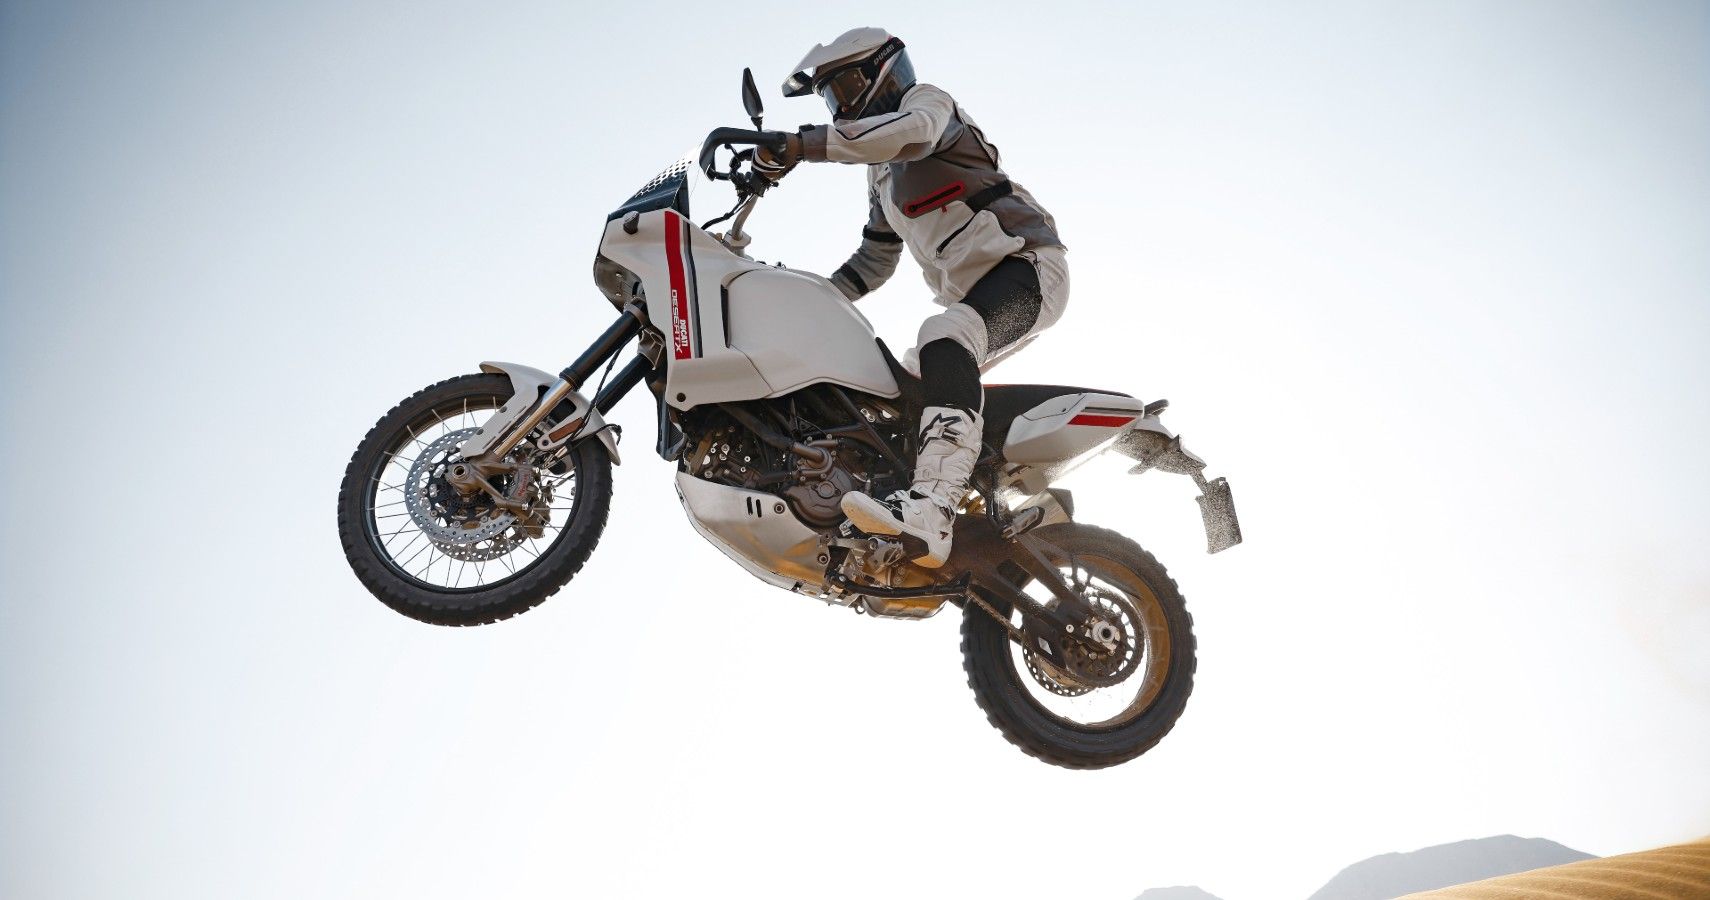 Ducati's New DesertX Looks Ready To Take On Dakar Rally